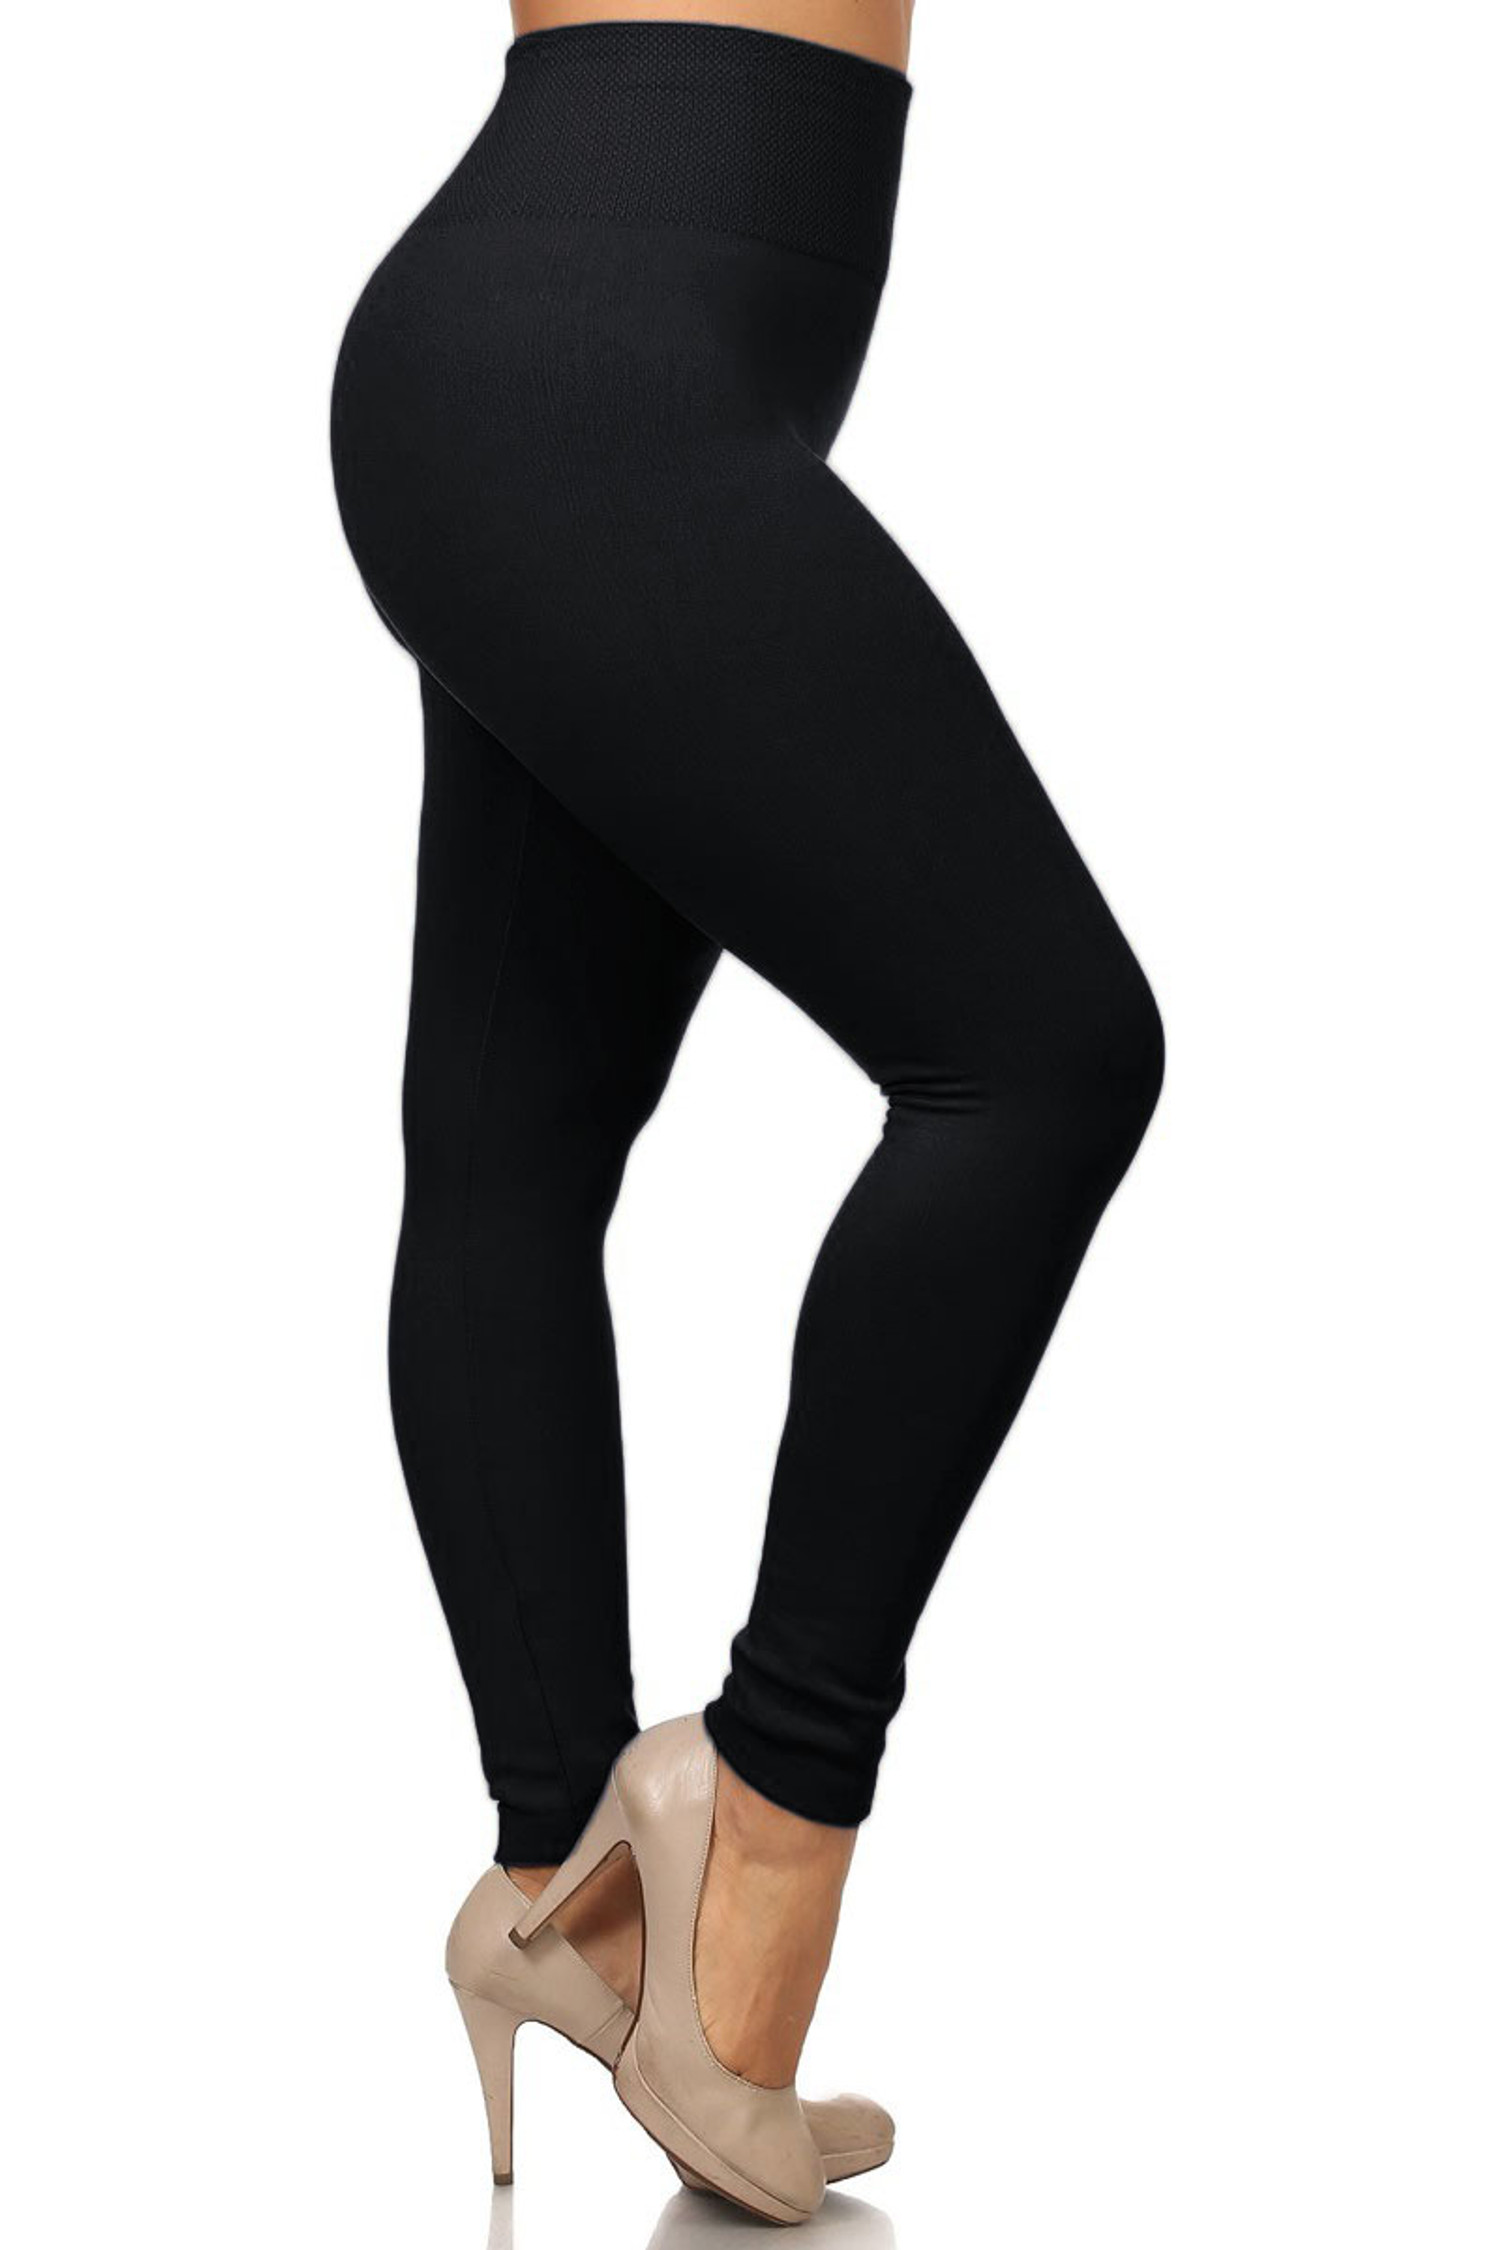 2 Pack Plus Size Fleece Lined Leggings Women-1X-4X High Waist Winter Tummy  Control Thermal Warm Yoga Pants Workout